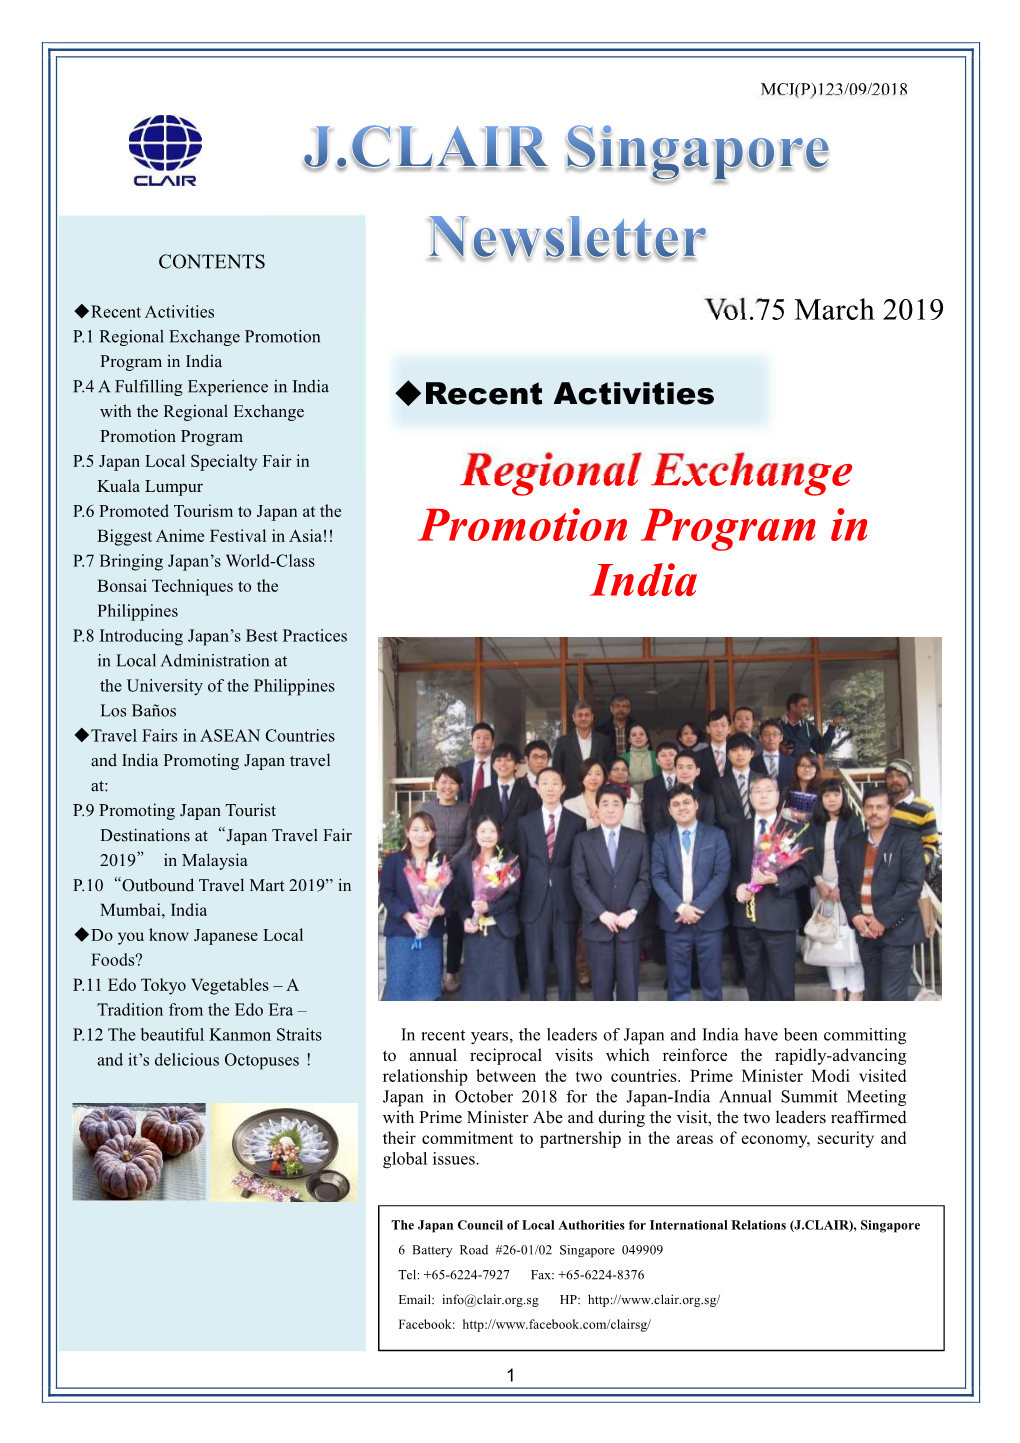 Regional Exchange Promotion Program in India